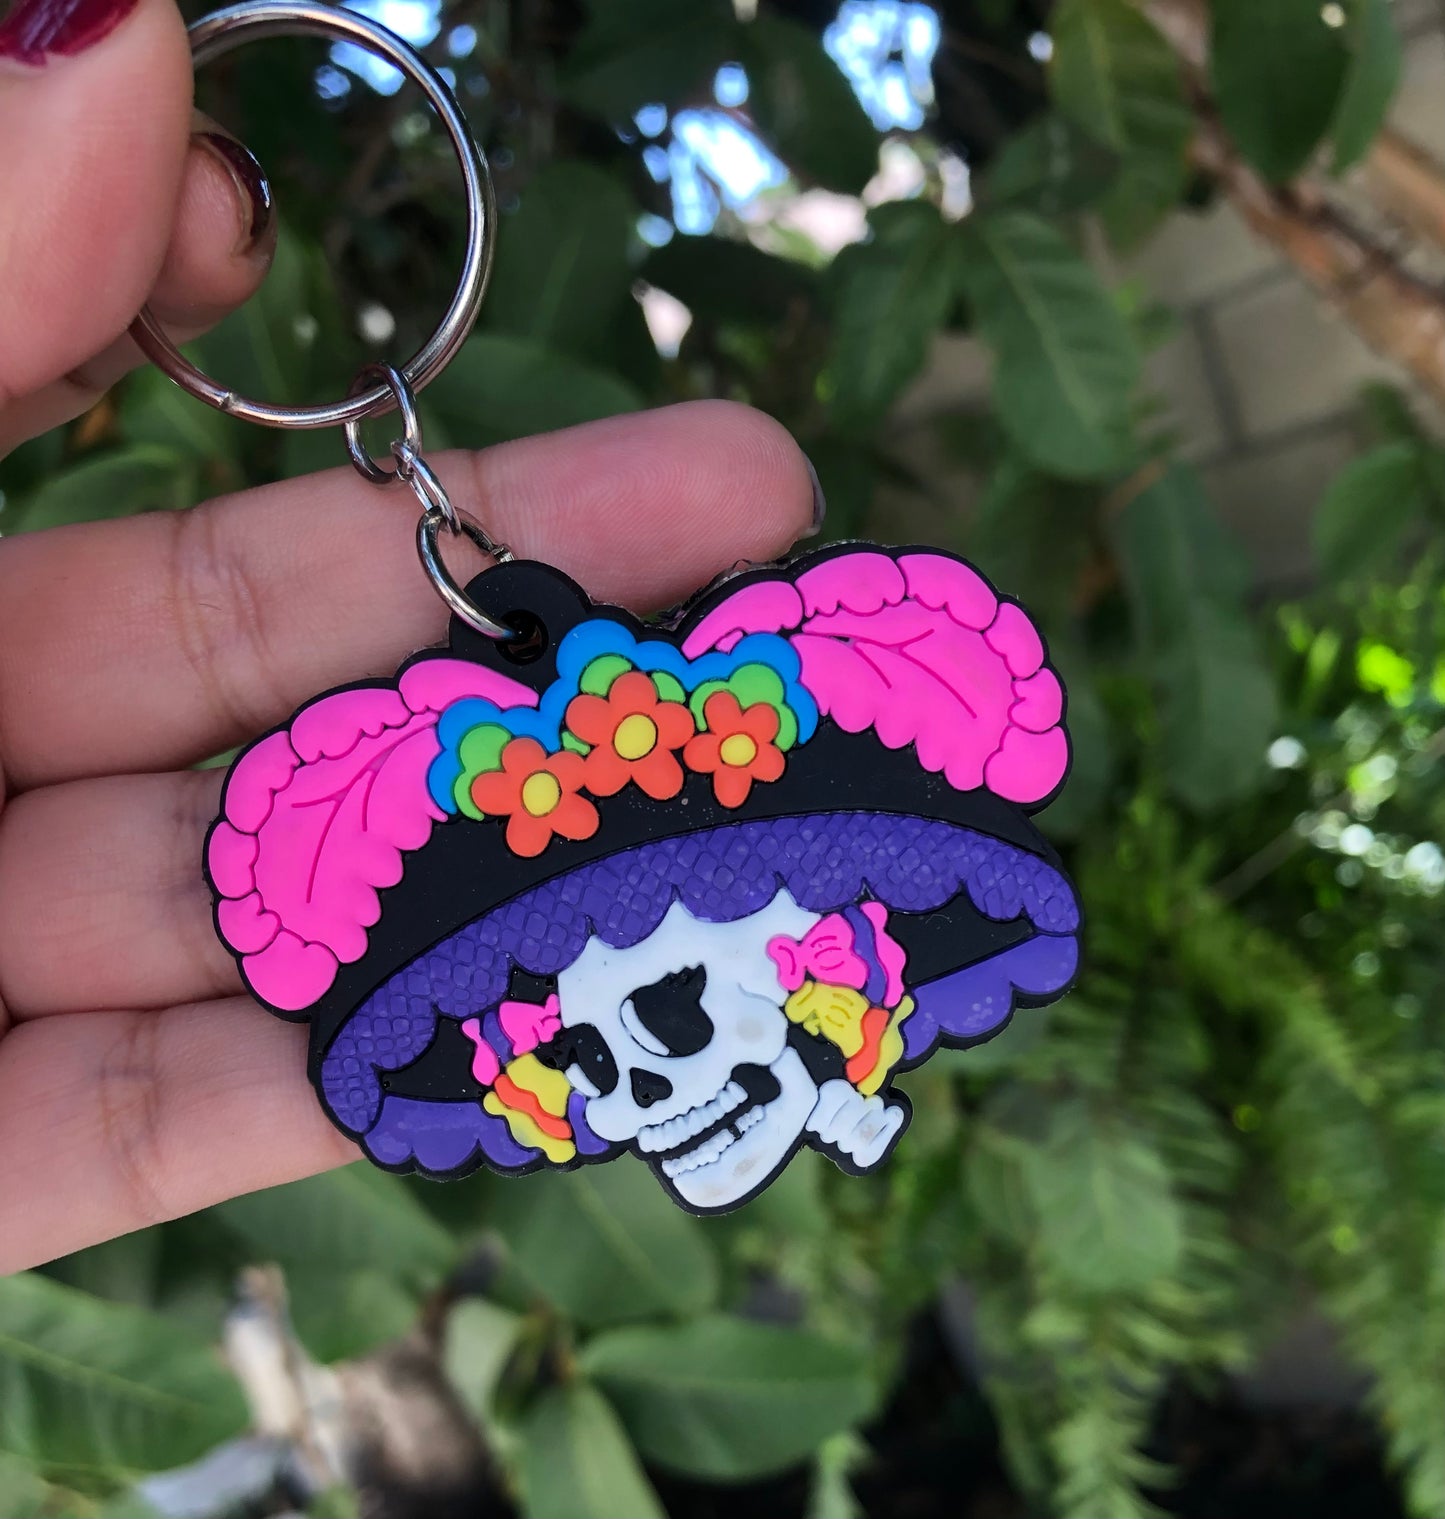 Mexican colorful skull Calavera keychain